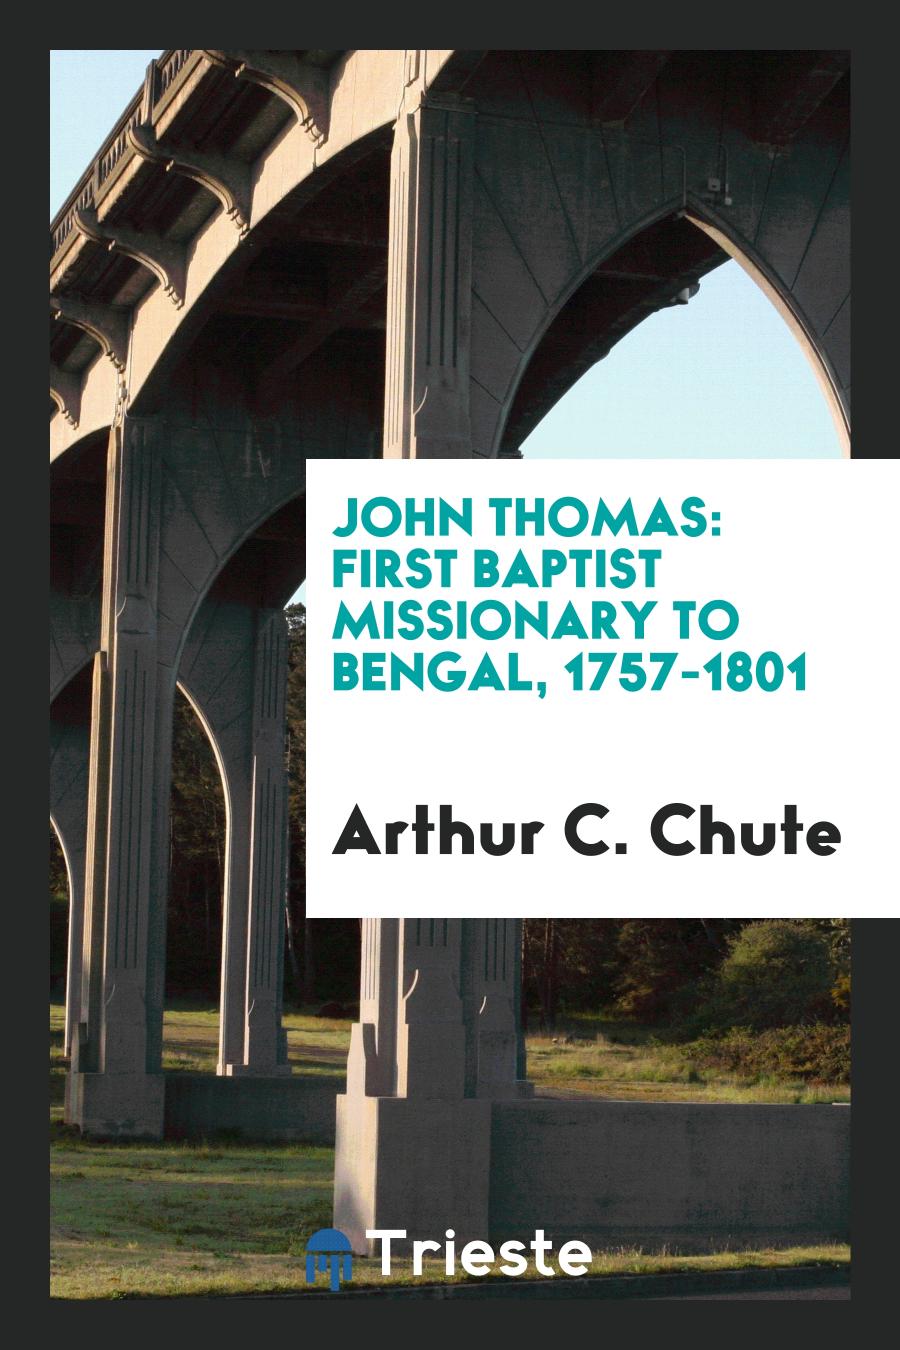 John Thomas: first Baptist missionary to Bengal, 1757-1801